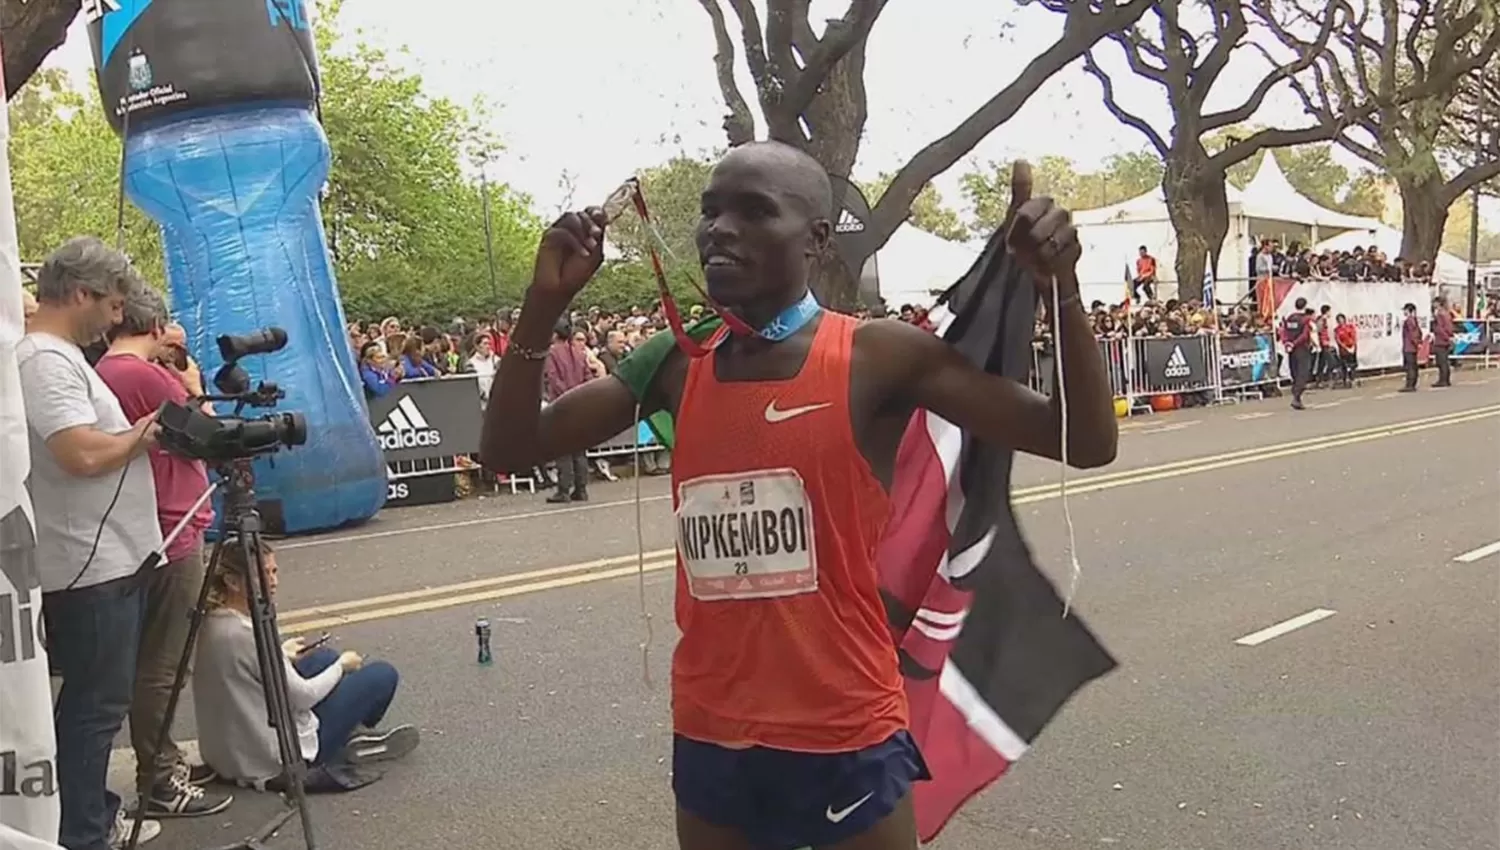 El keniata Kipkemboi ganó los 42 km de Buenos Aires.